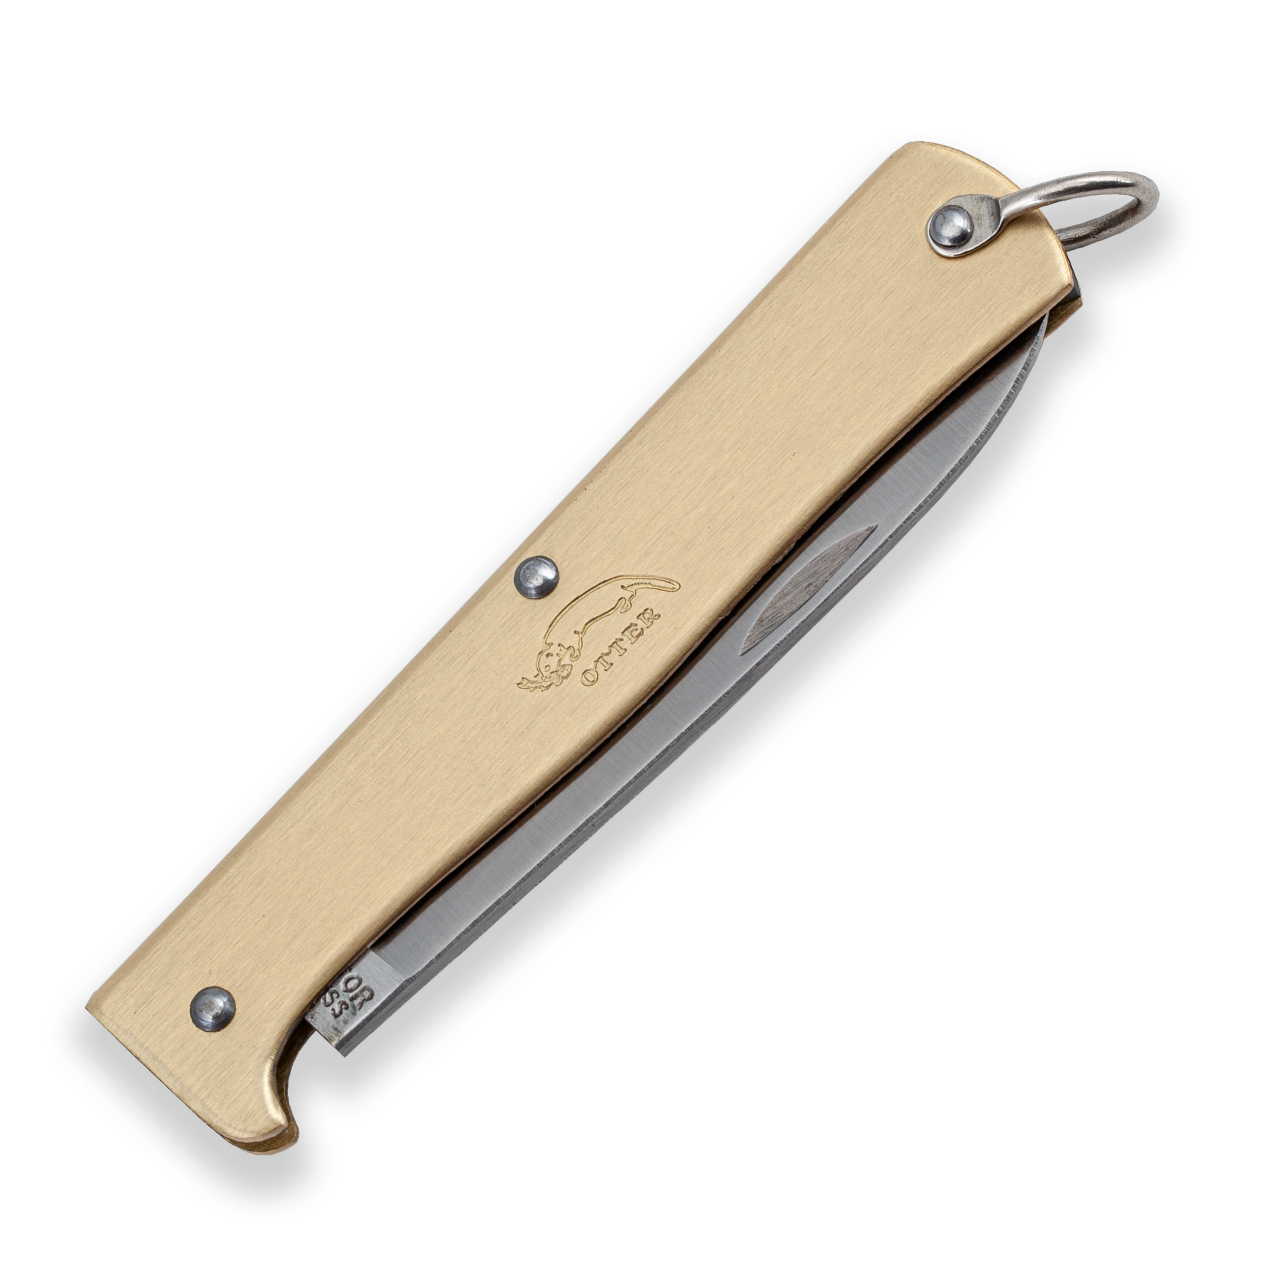 Otter-messer Brass Small Mercator Straight Folding Carbon Steel Knife 10701  for sale online